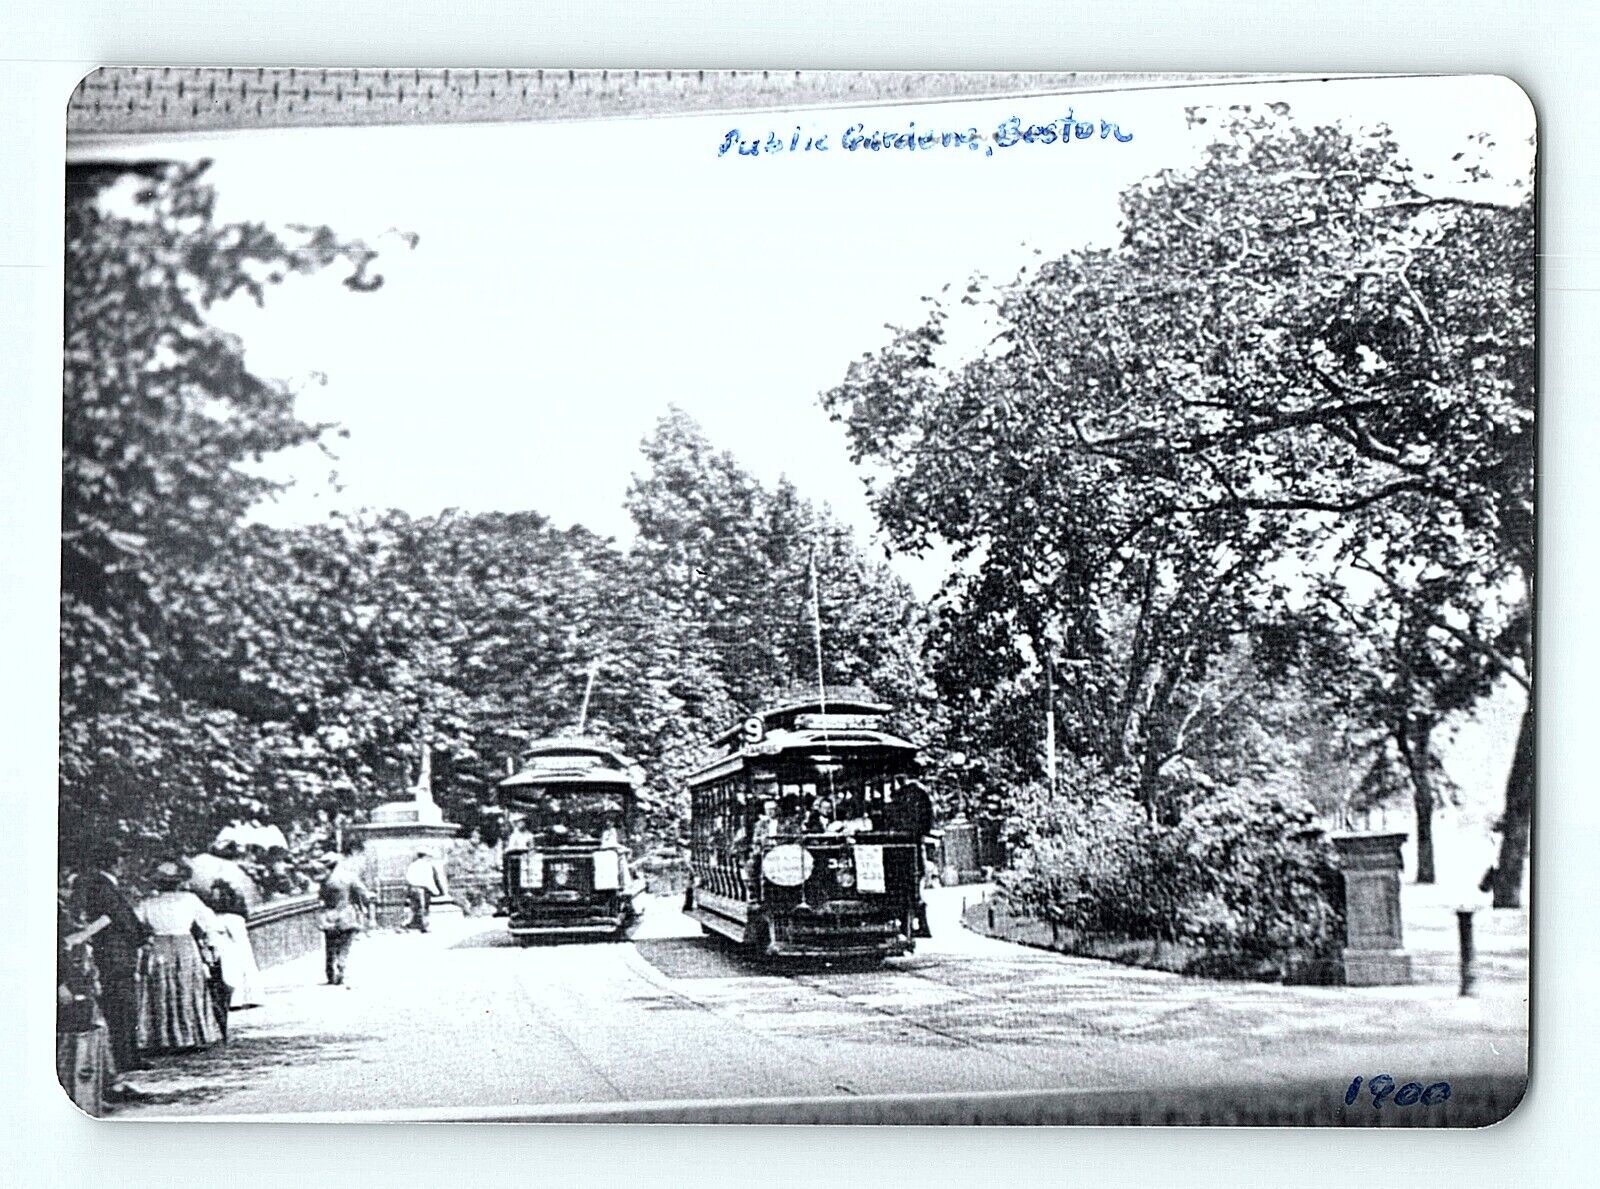 1900 Public Gardens Boston Trolley Cars Victorian Dress RPPC Postcard F1